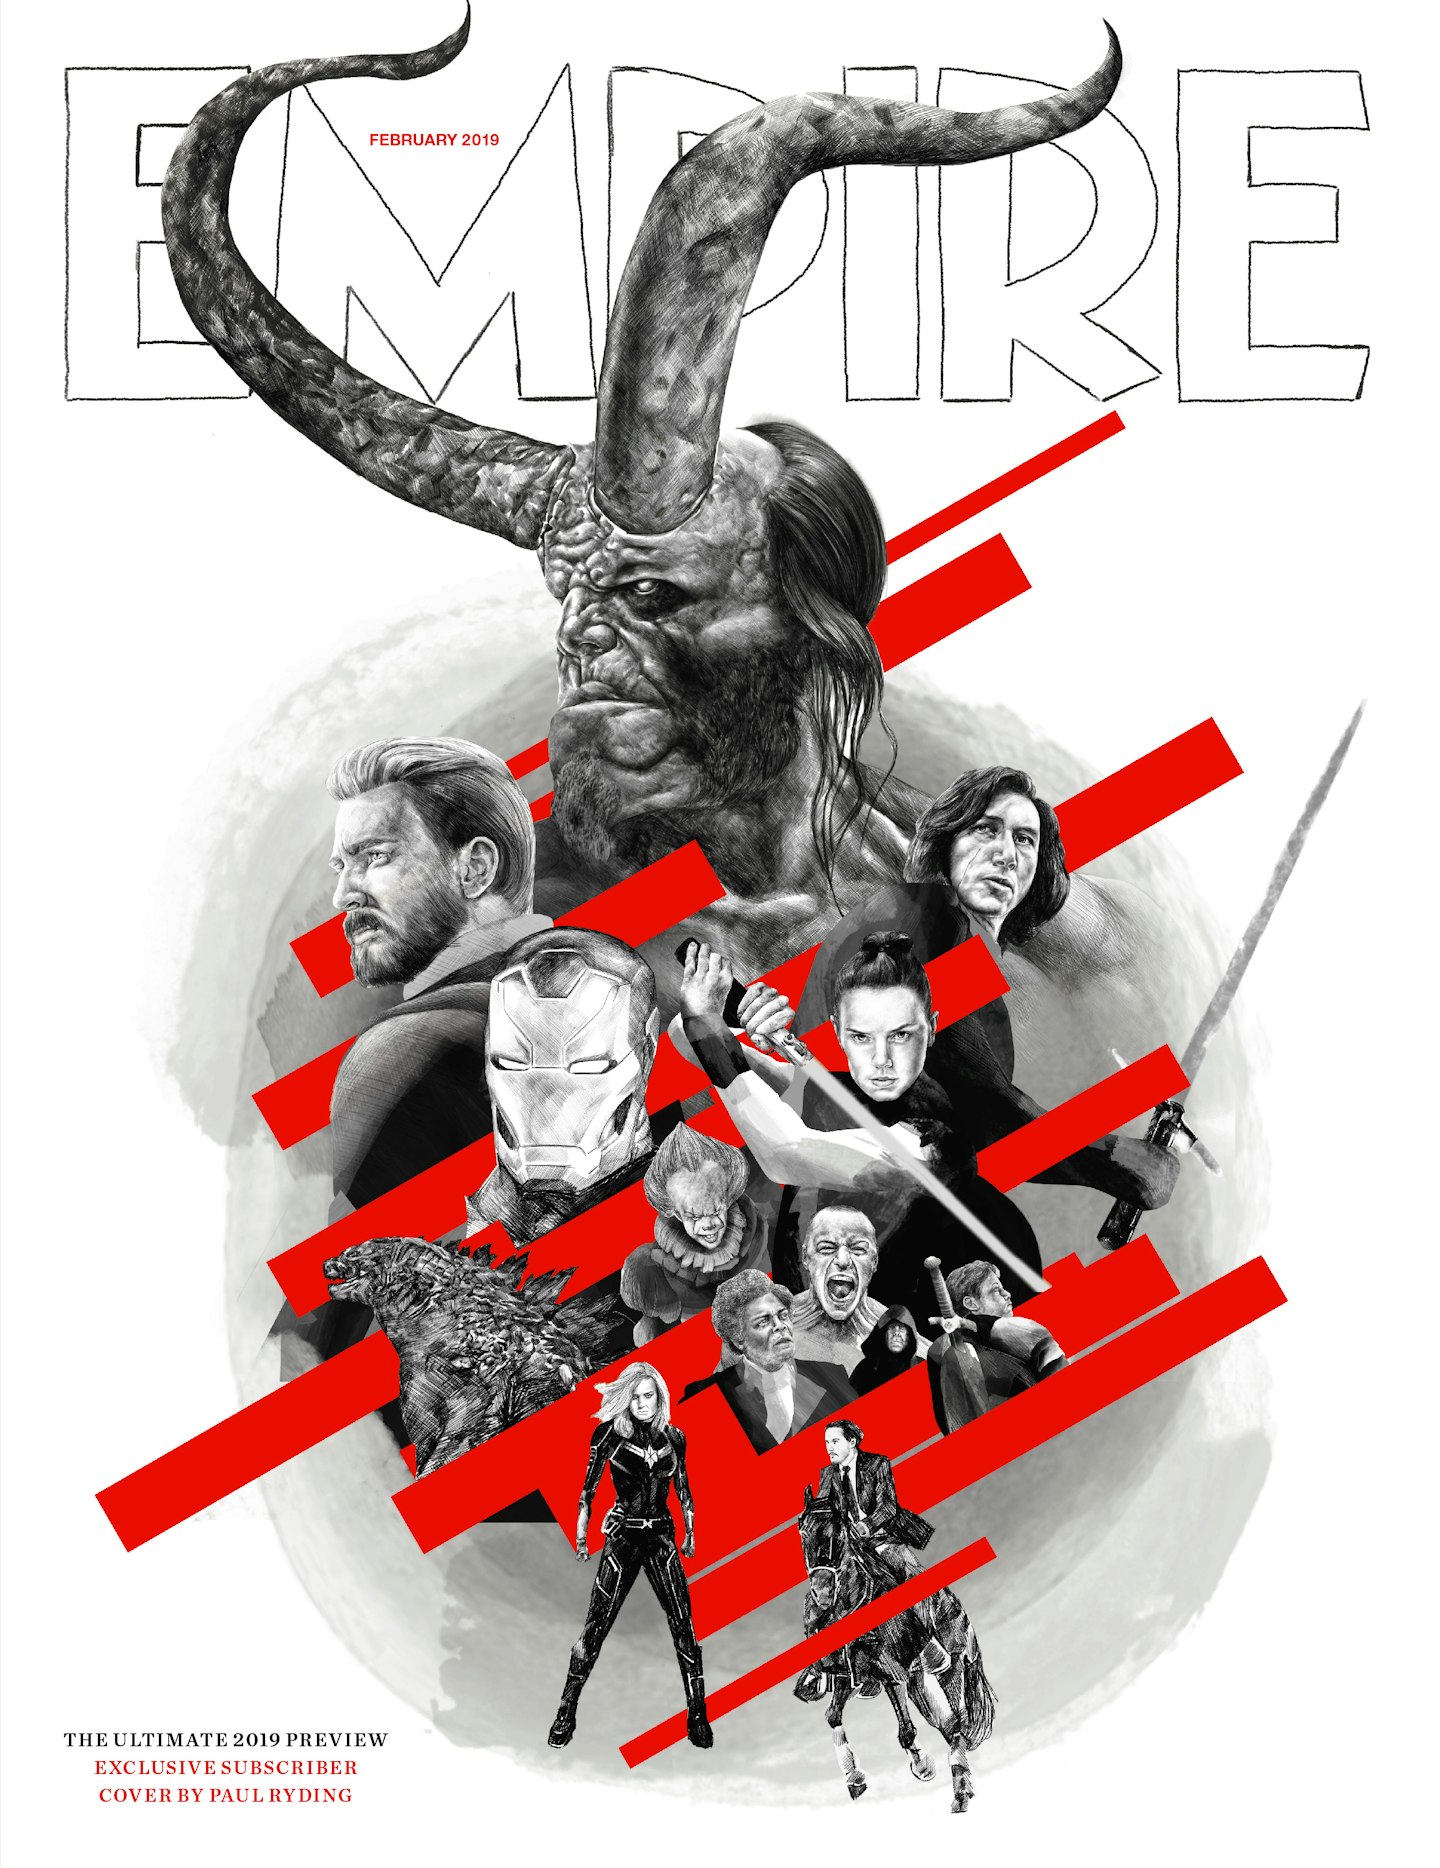 Empire – February 2019 subscriber cover